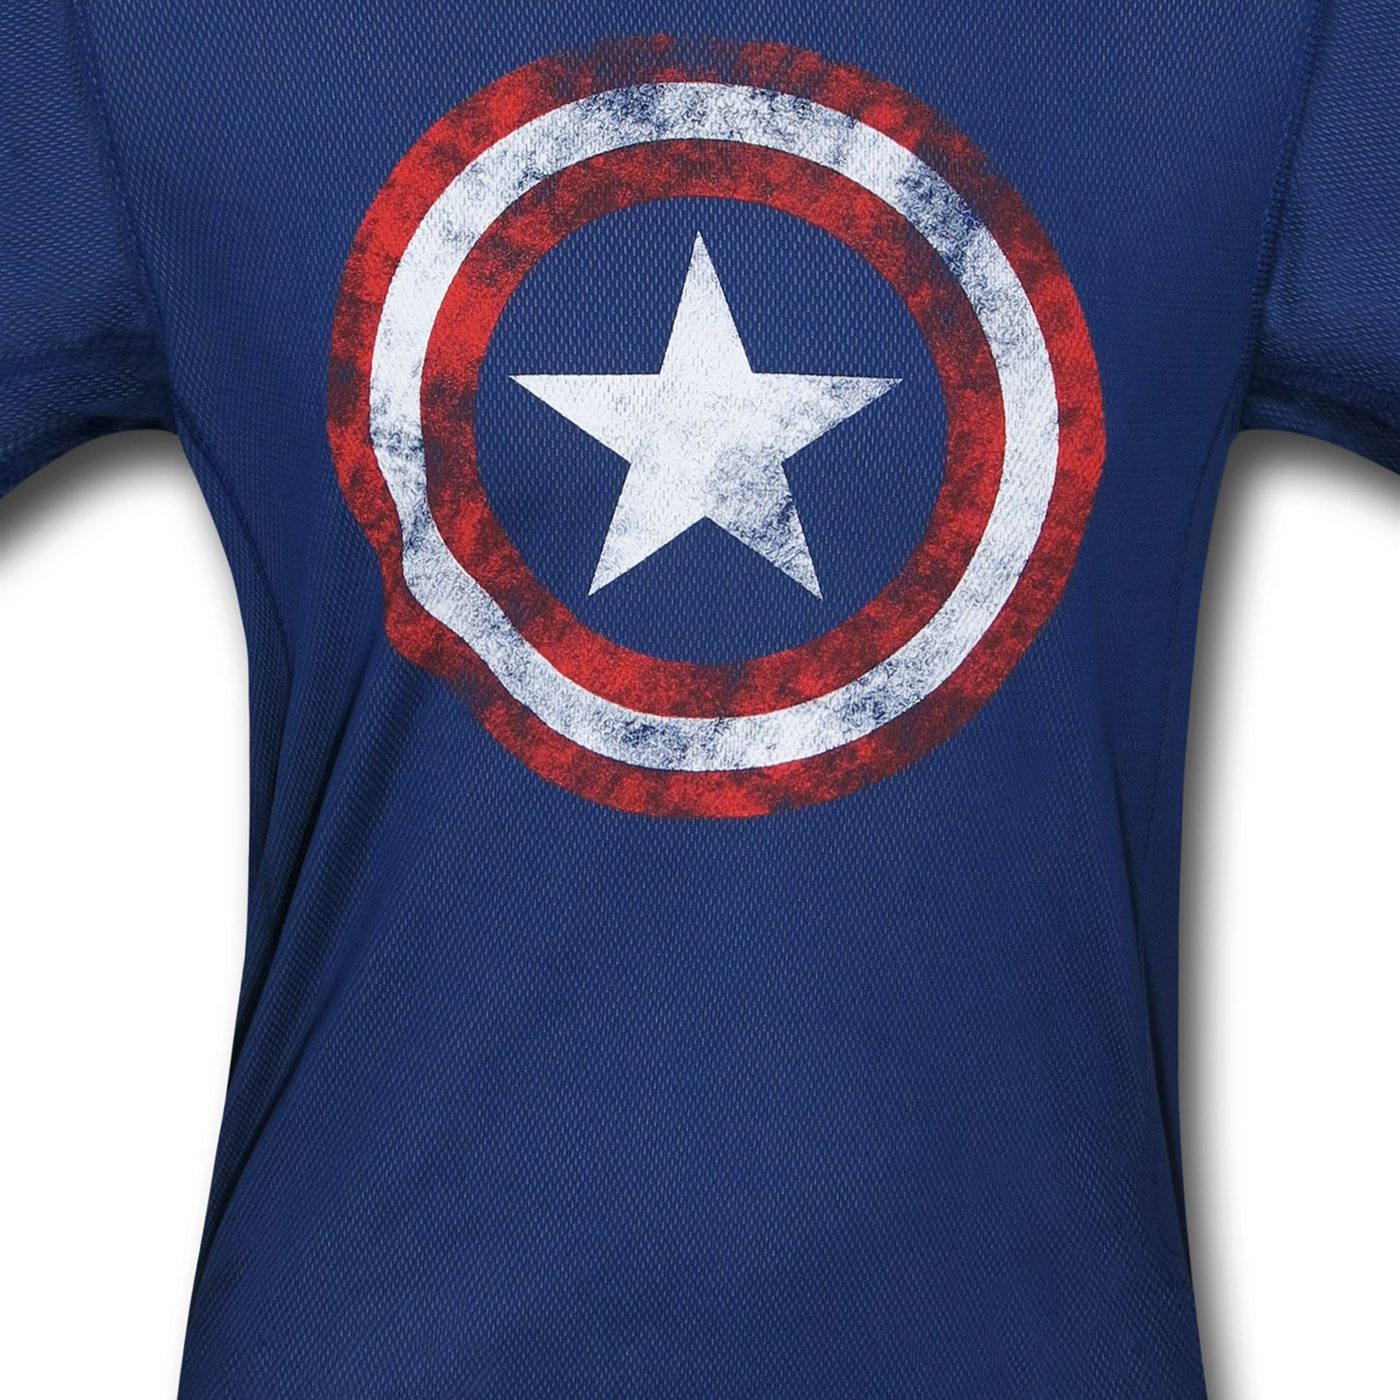 Captain America Shield Polymesh Kids T-Shirt